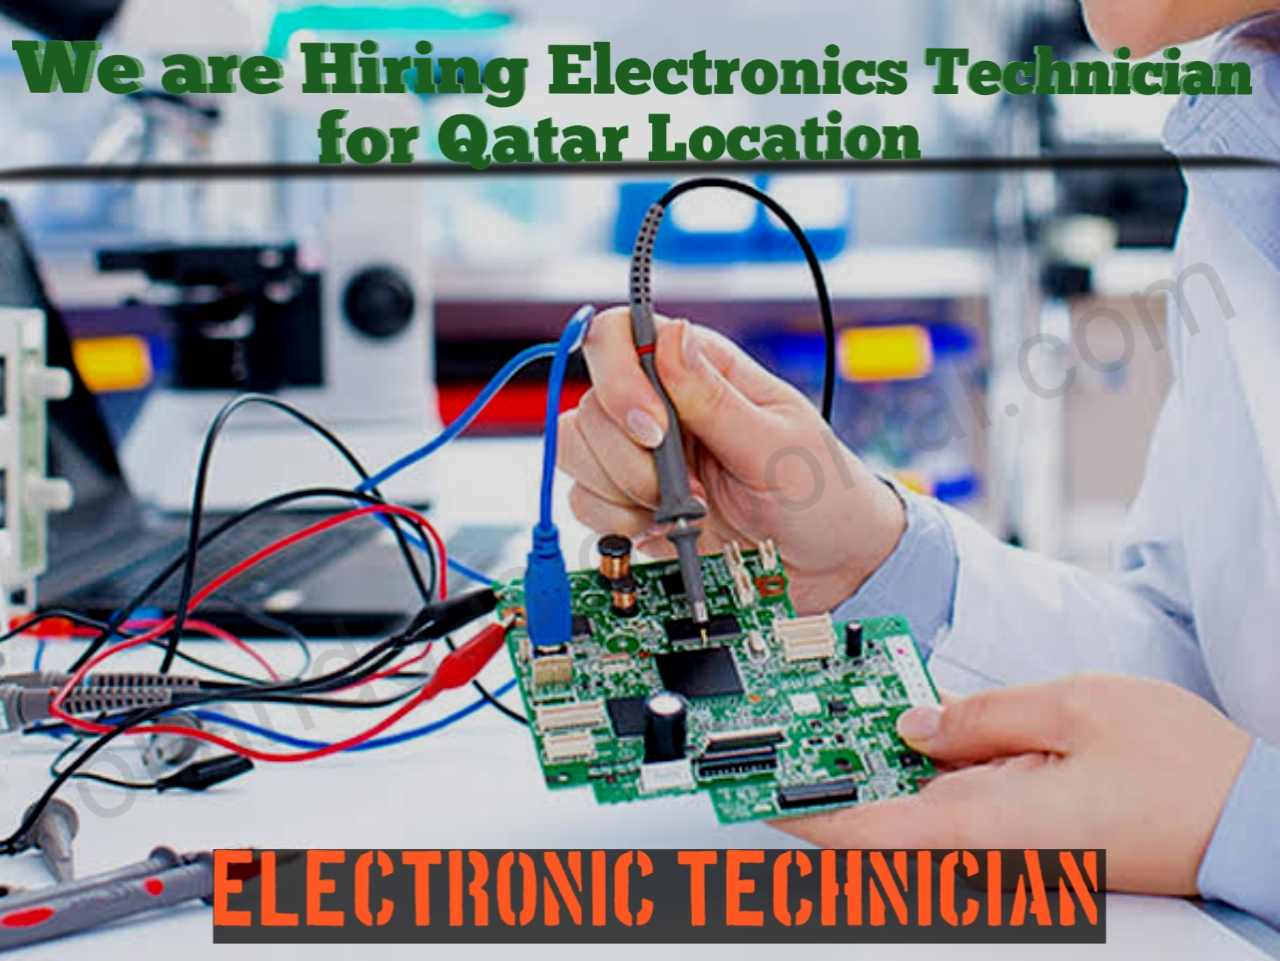 We are Hiring Electronics Technician for Qatar Location